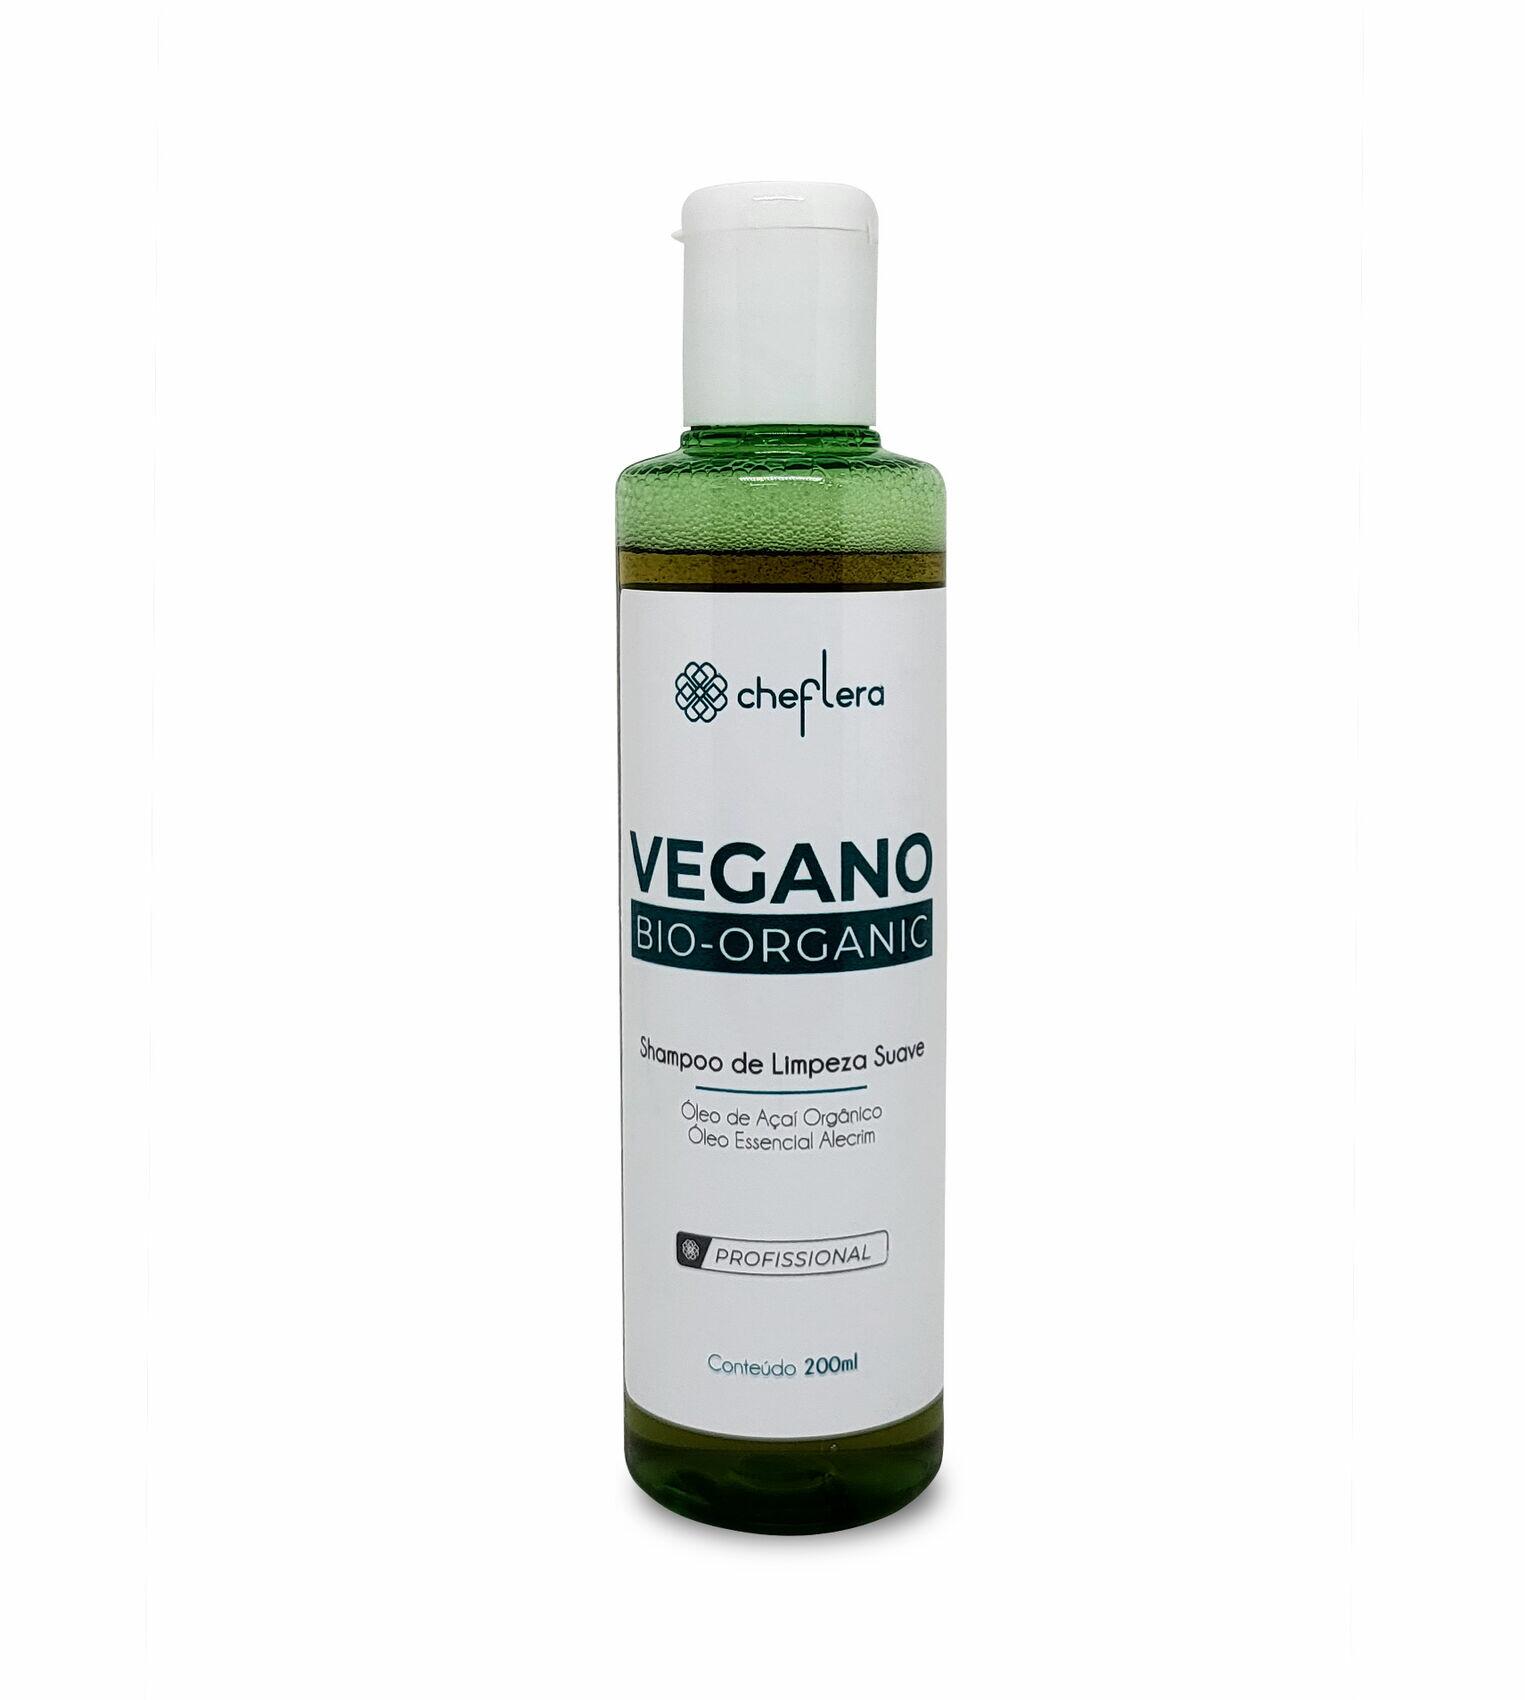 Vegano Bio-Organic | Shampoo de Limpeza Suave